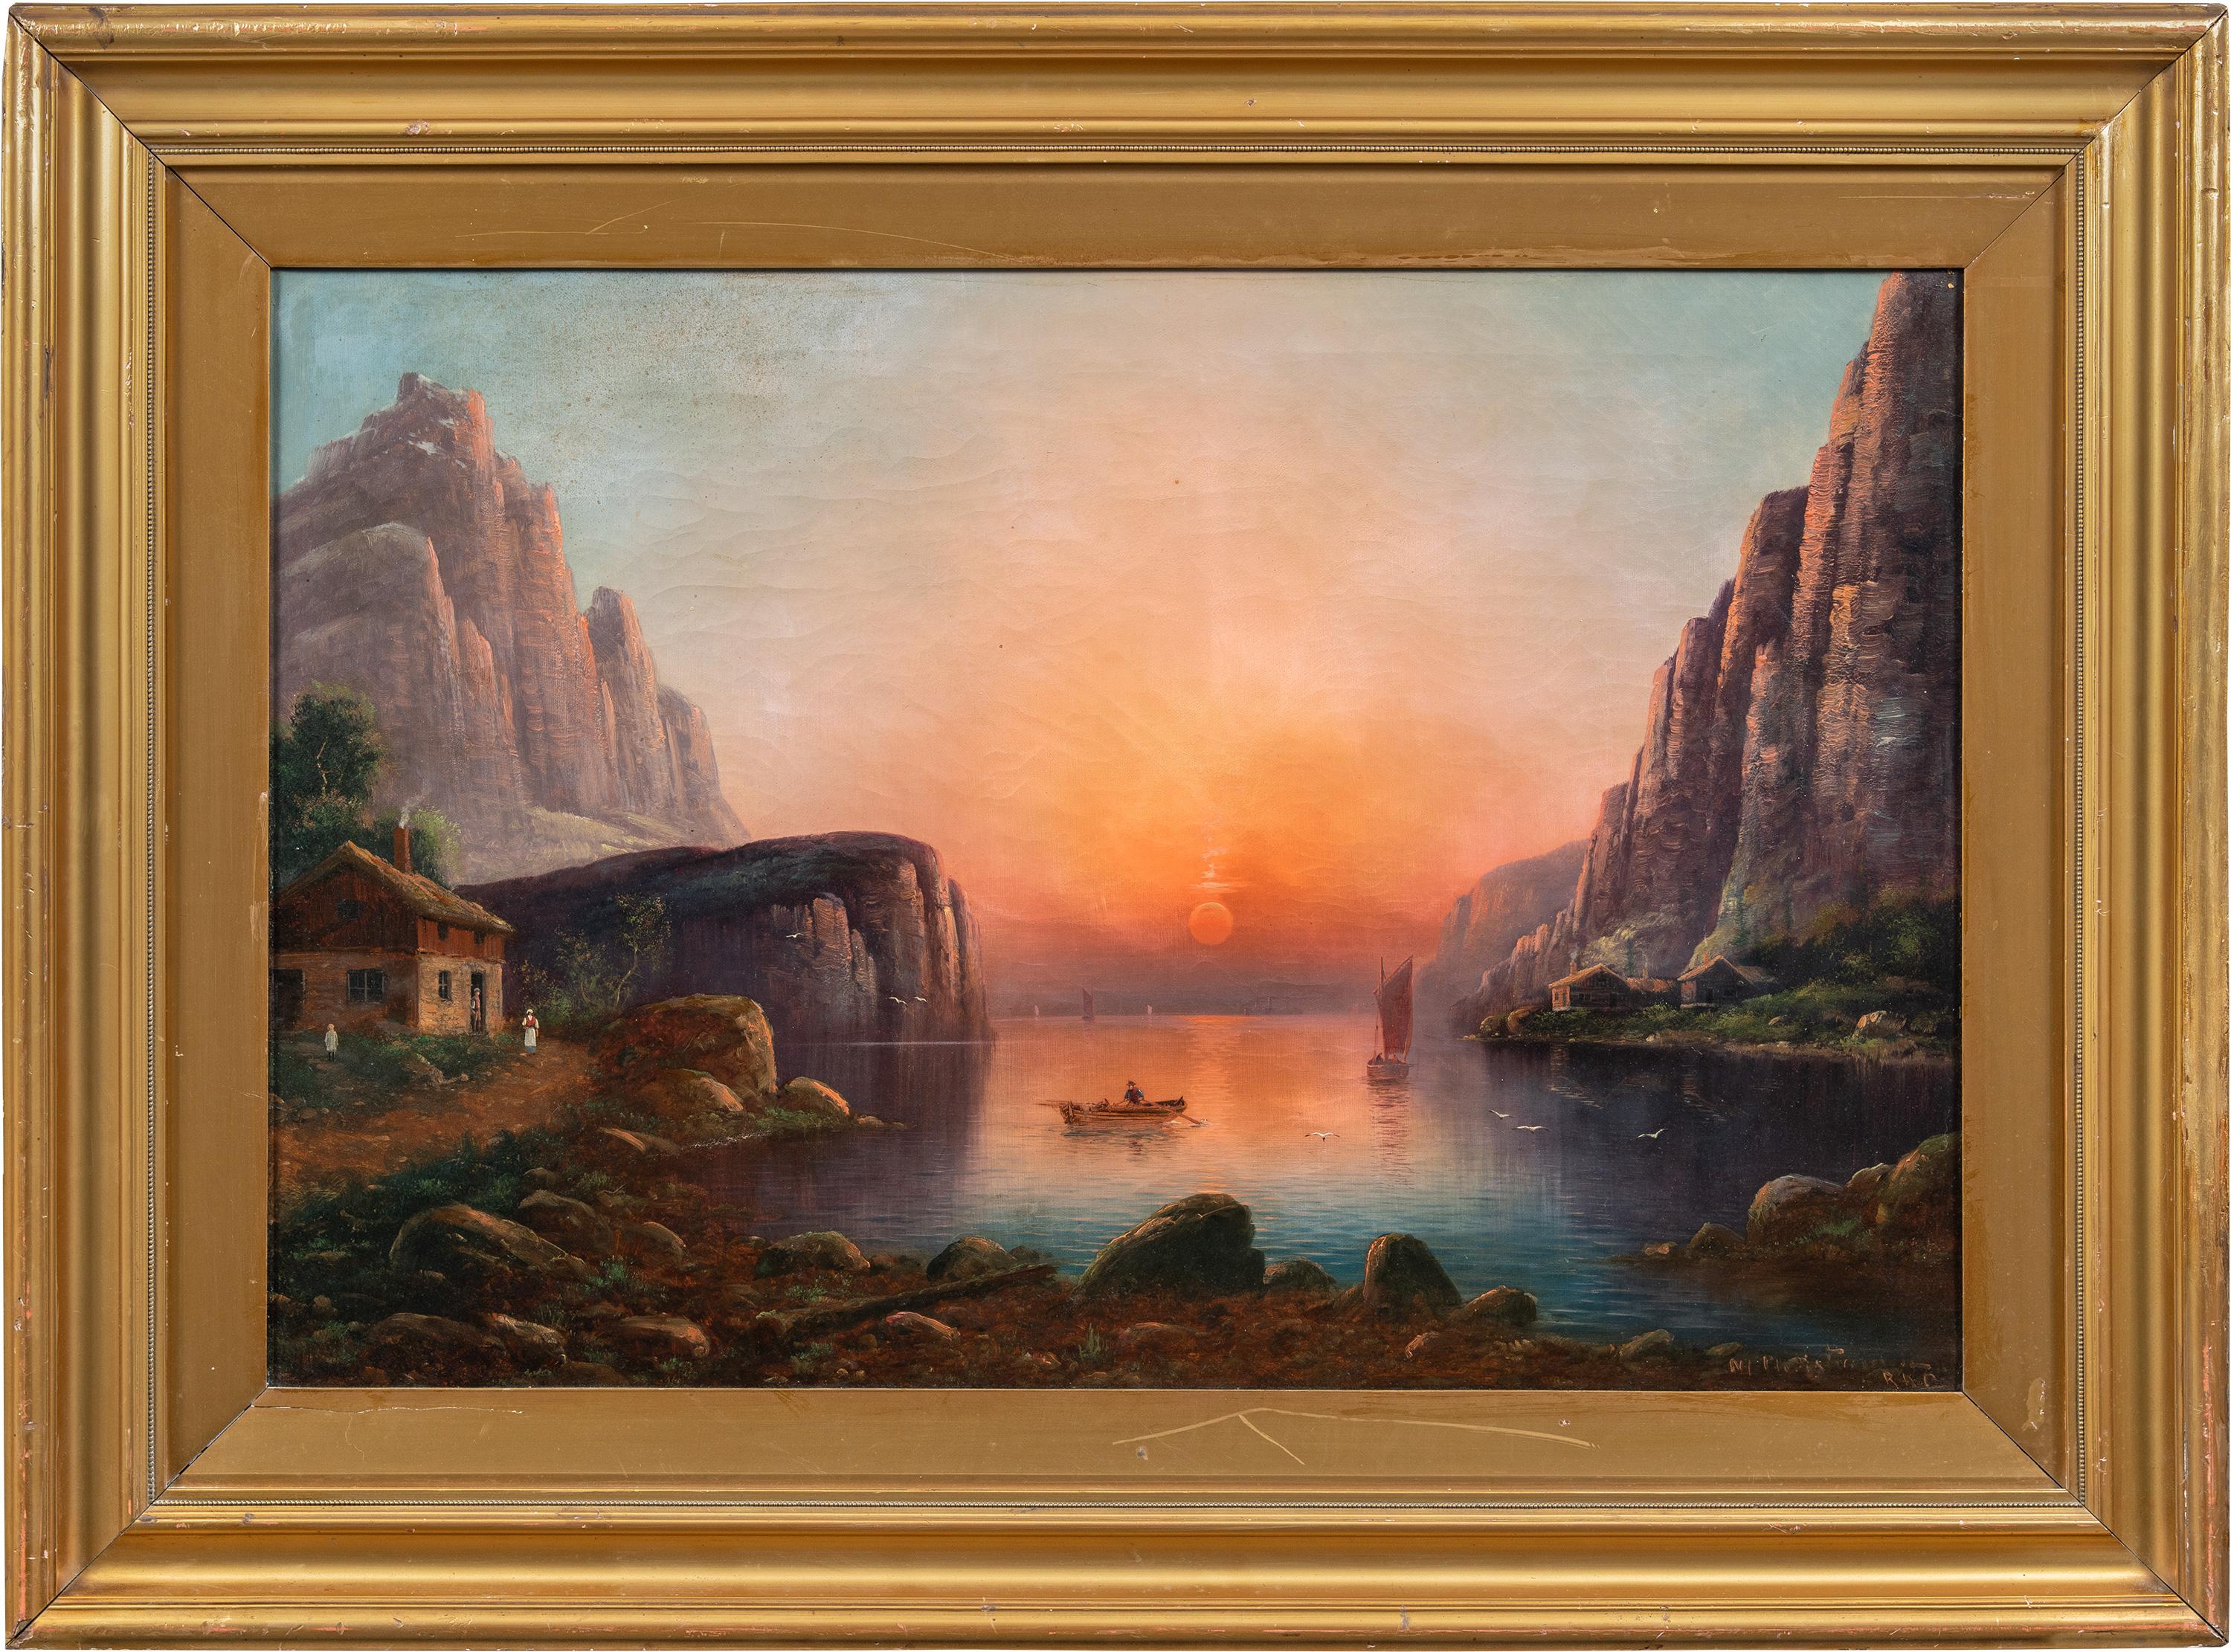 Unknown Figurative Painting - Nils Christiansen (Danish painter) - 19th century landscape painting - Sunset